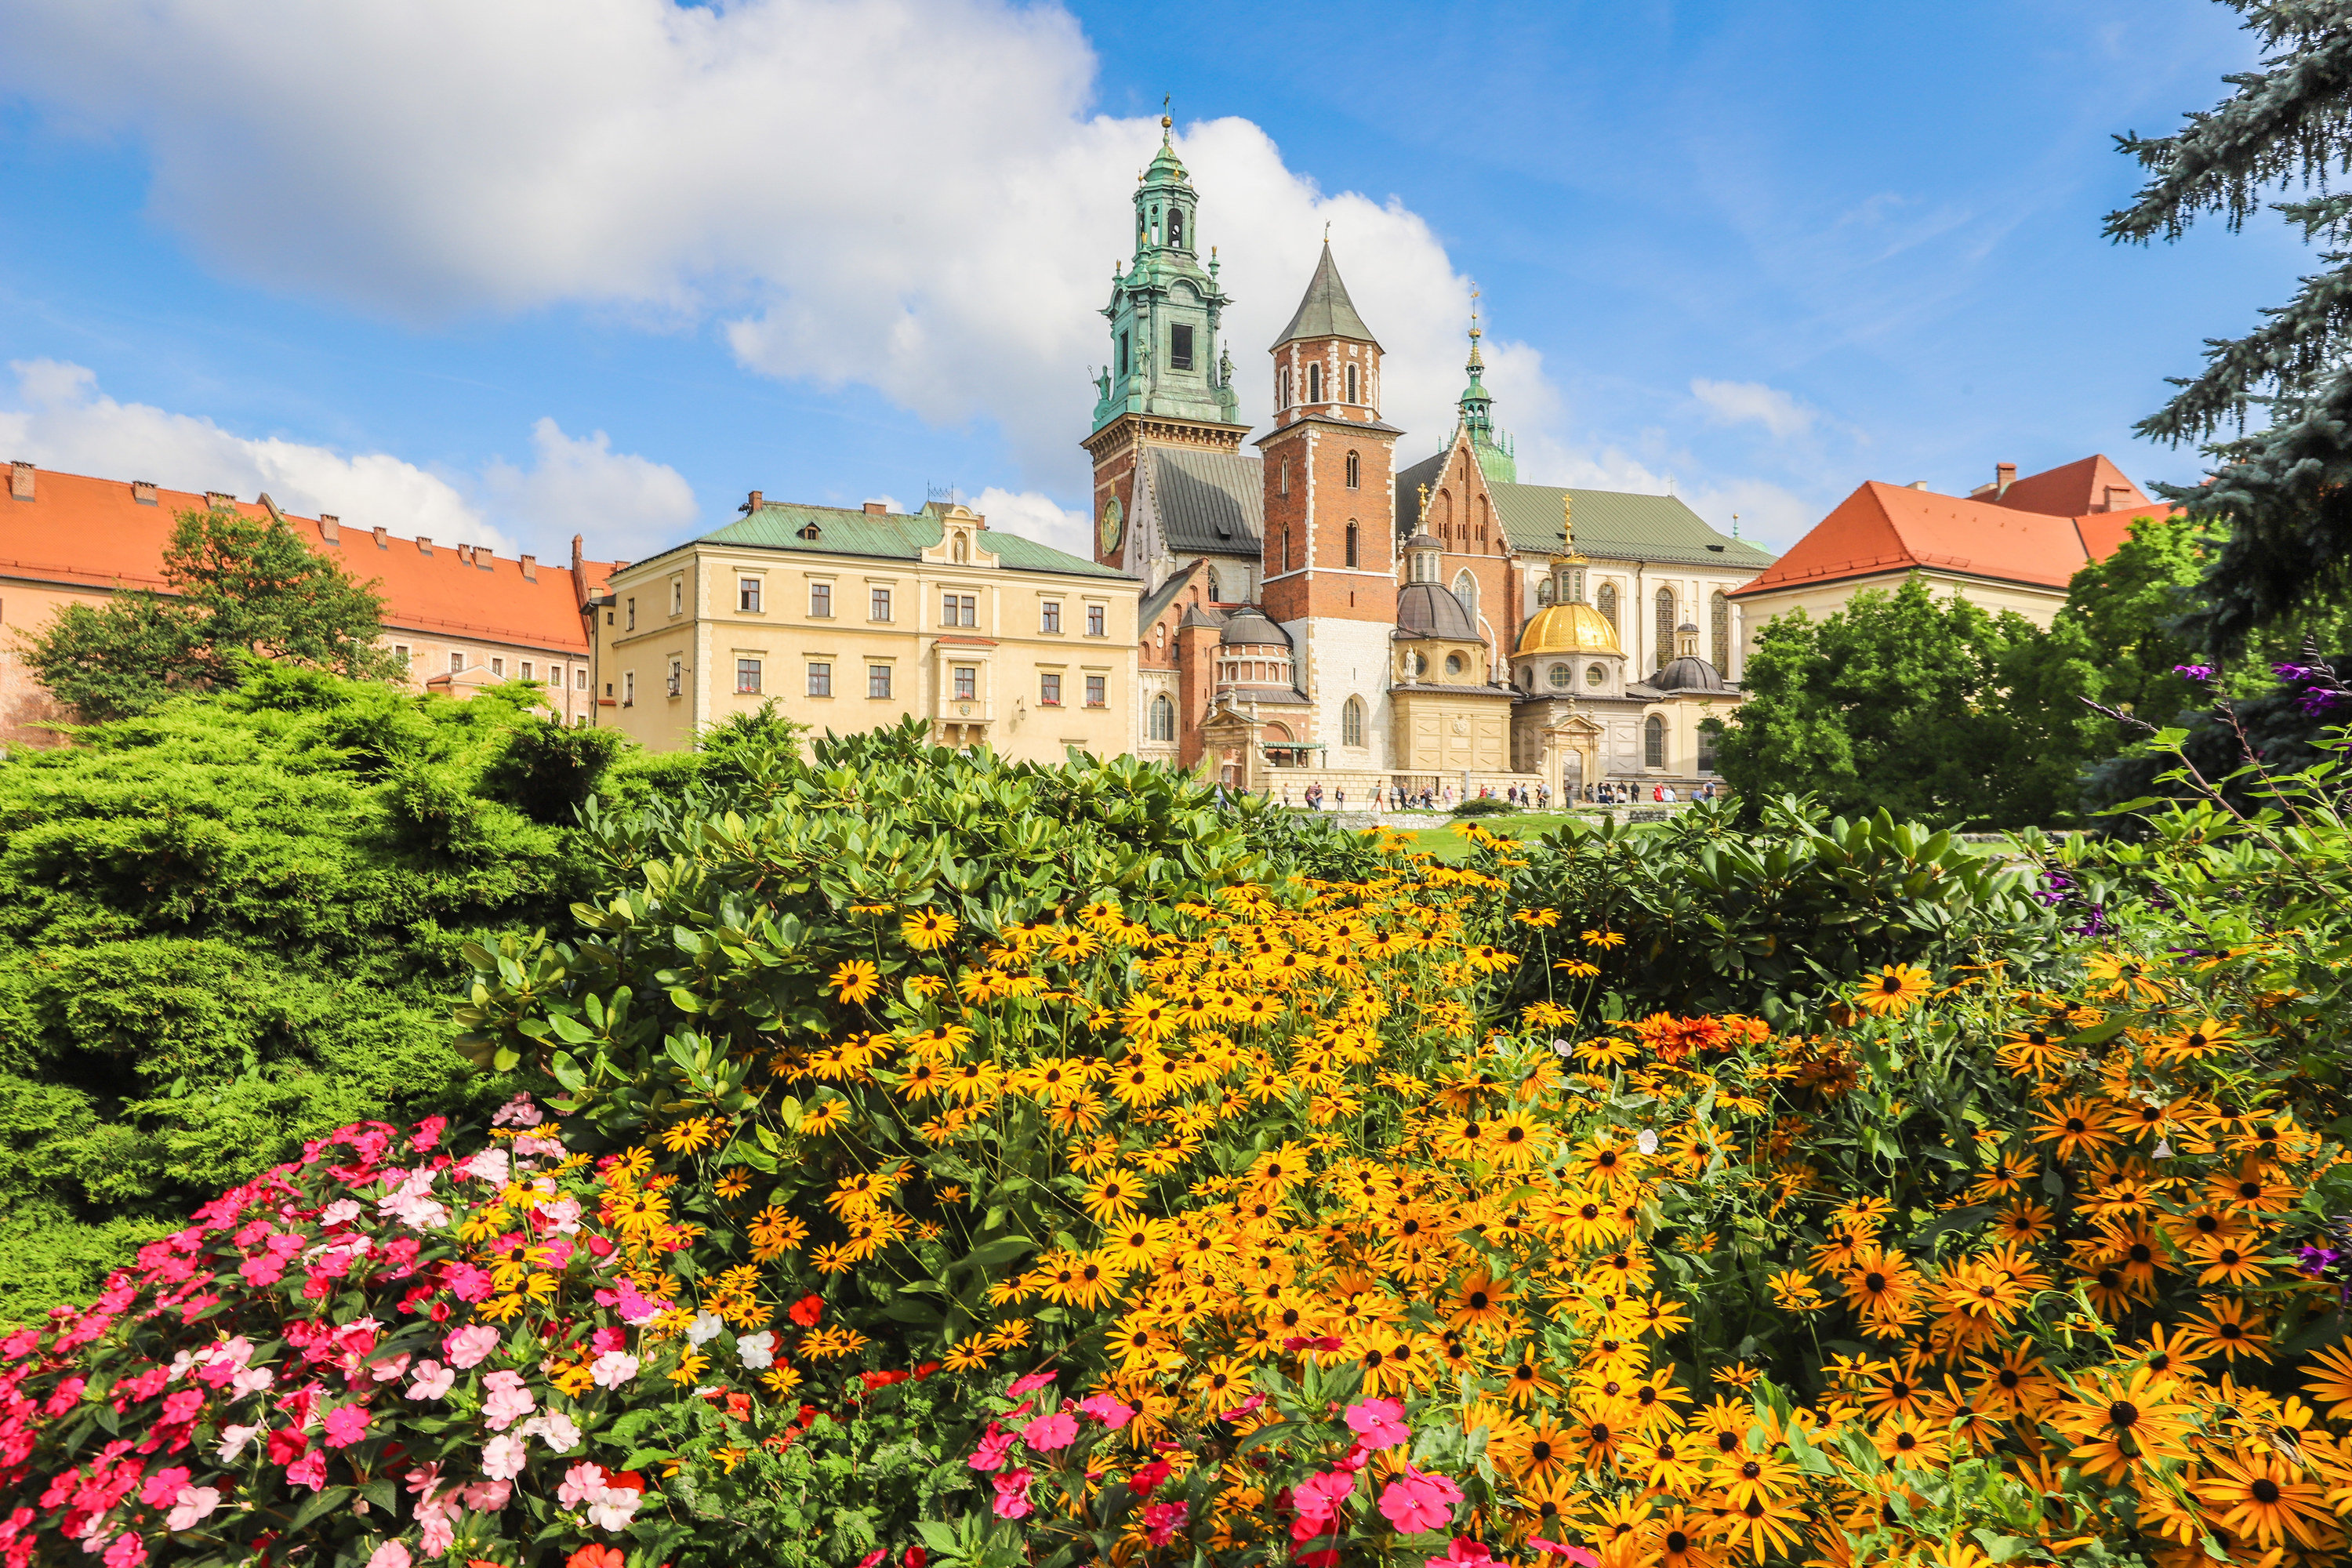 Colorful flowers bloom in front of European buildings.